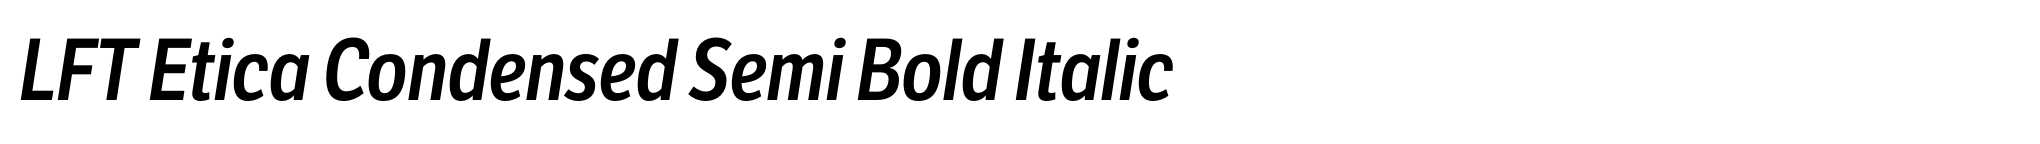 LFT Etica Condensed Semi Bold Italic image